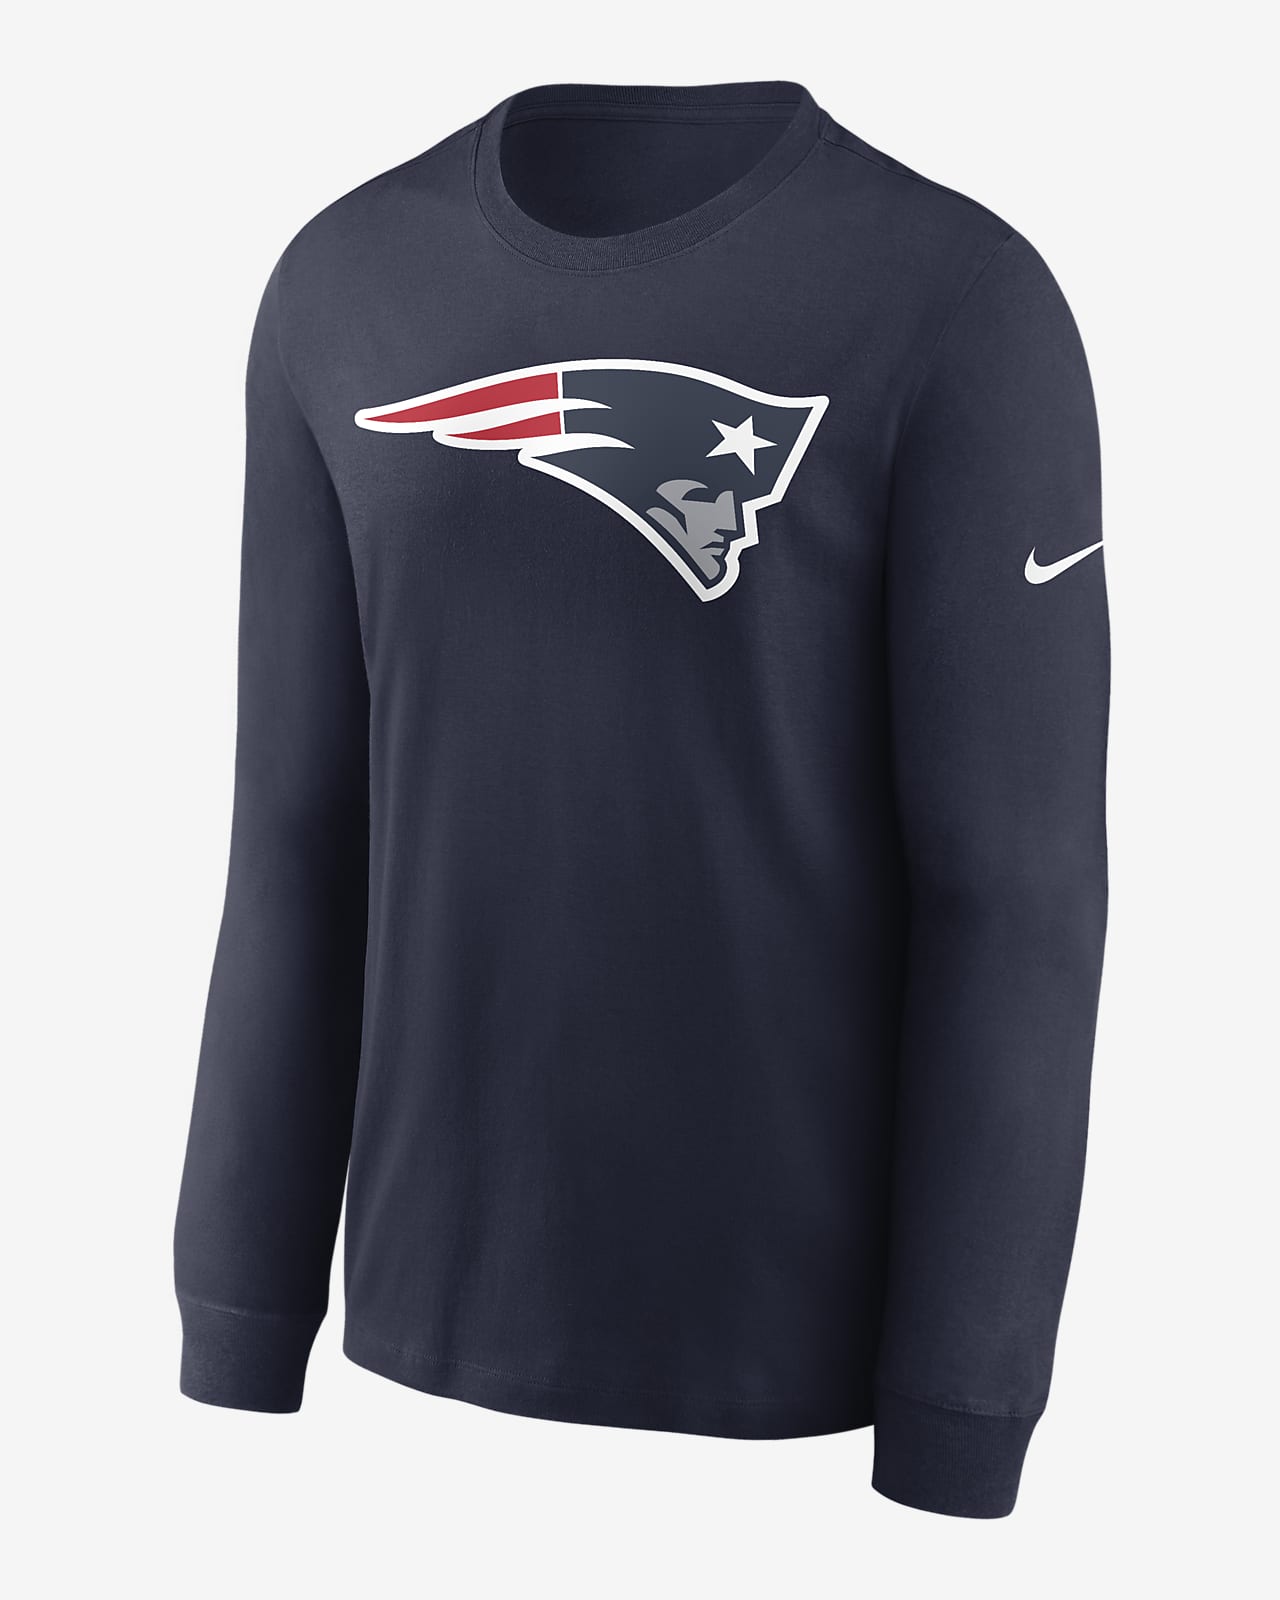 Nike Primary Logo (NFL New England Patriots) Men’s Long-Sleeve T-Shirt